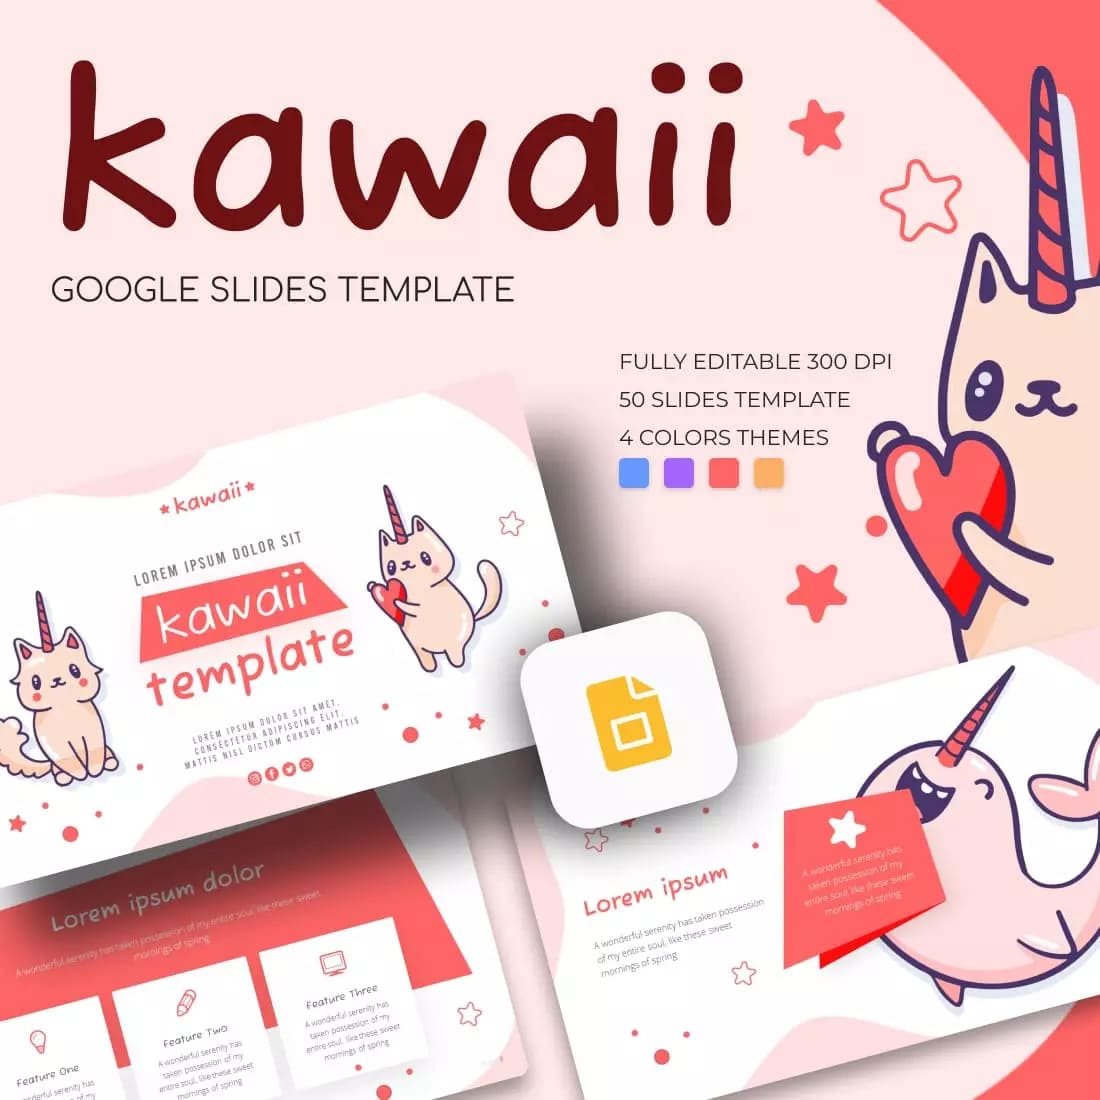 Kawaii Google Slides Template Preview 3 1.